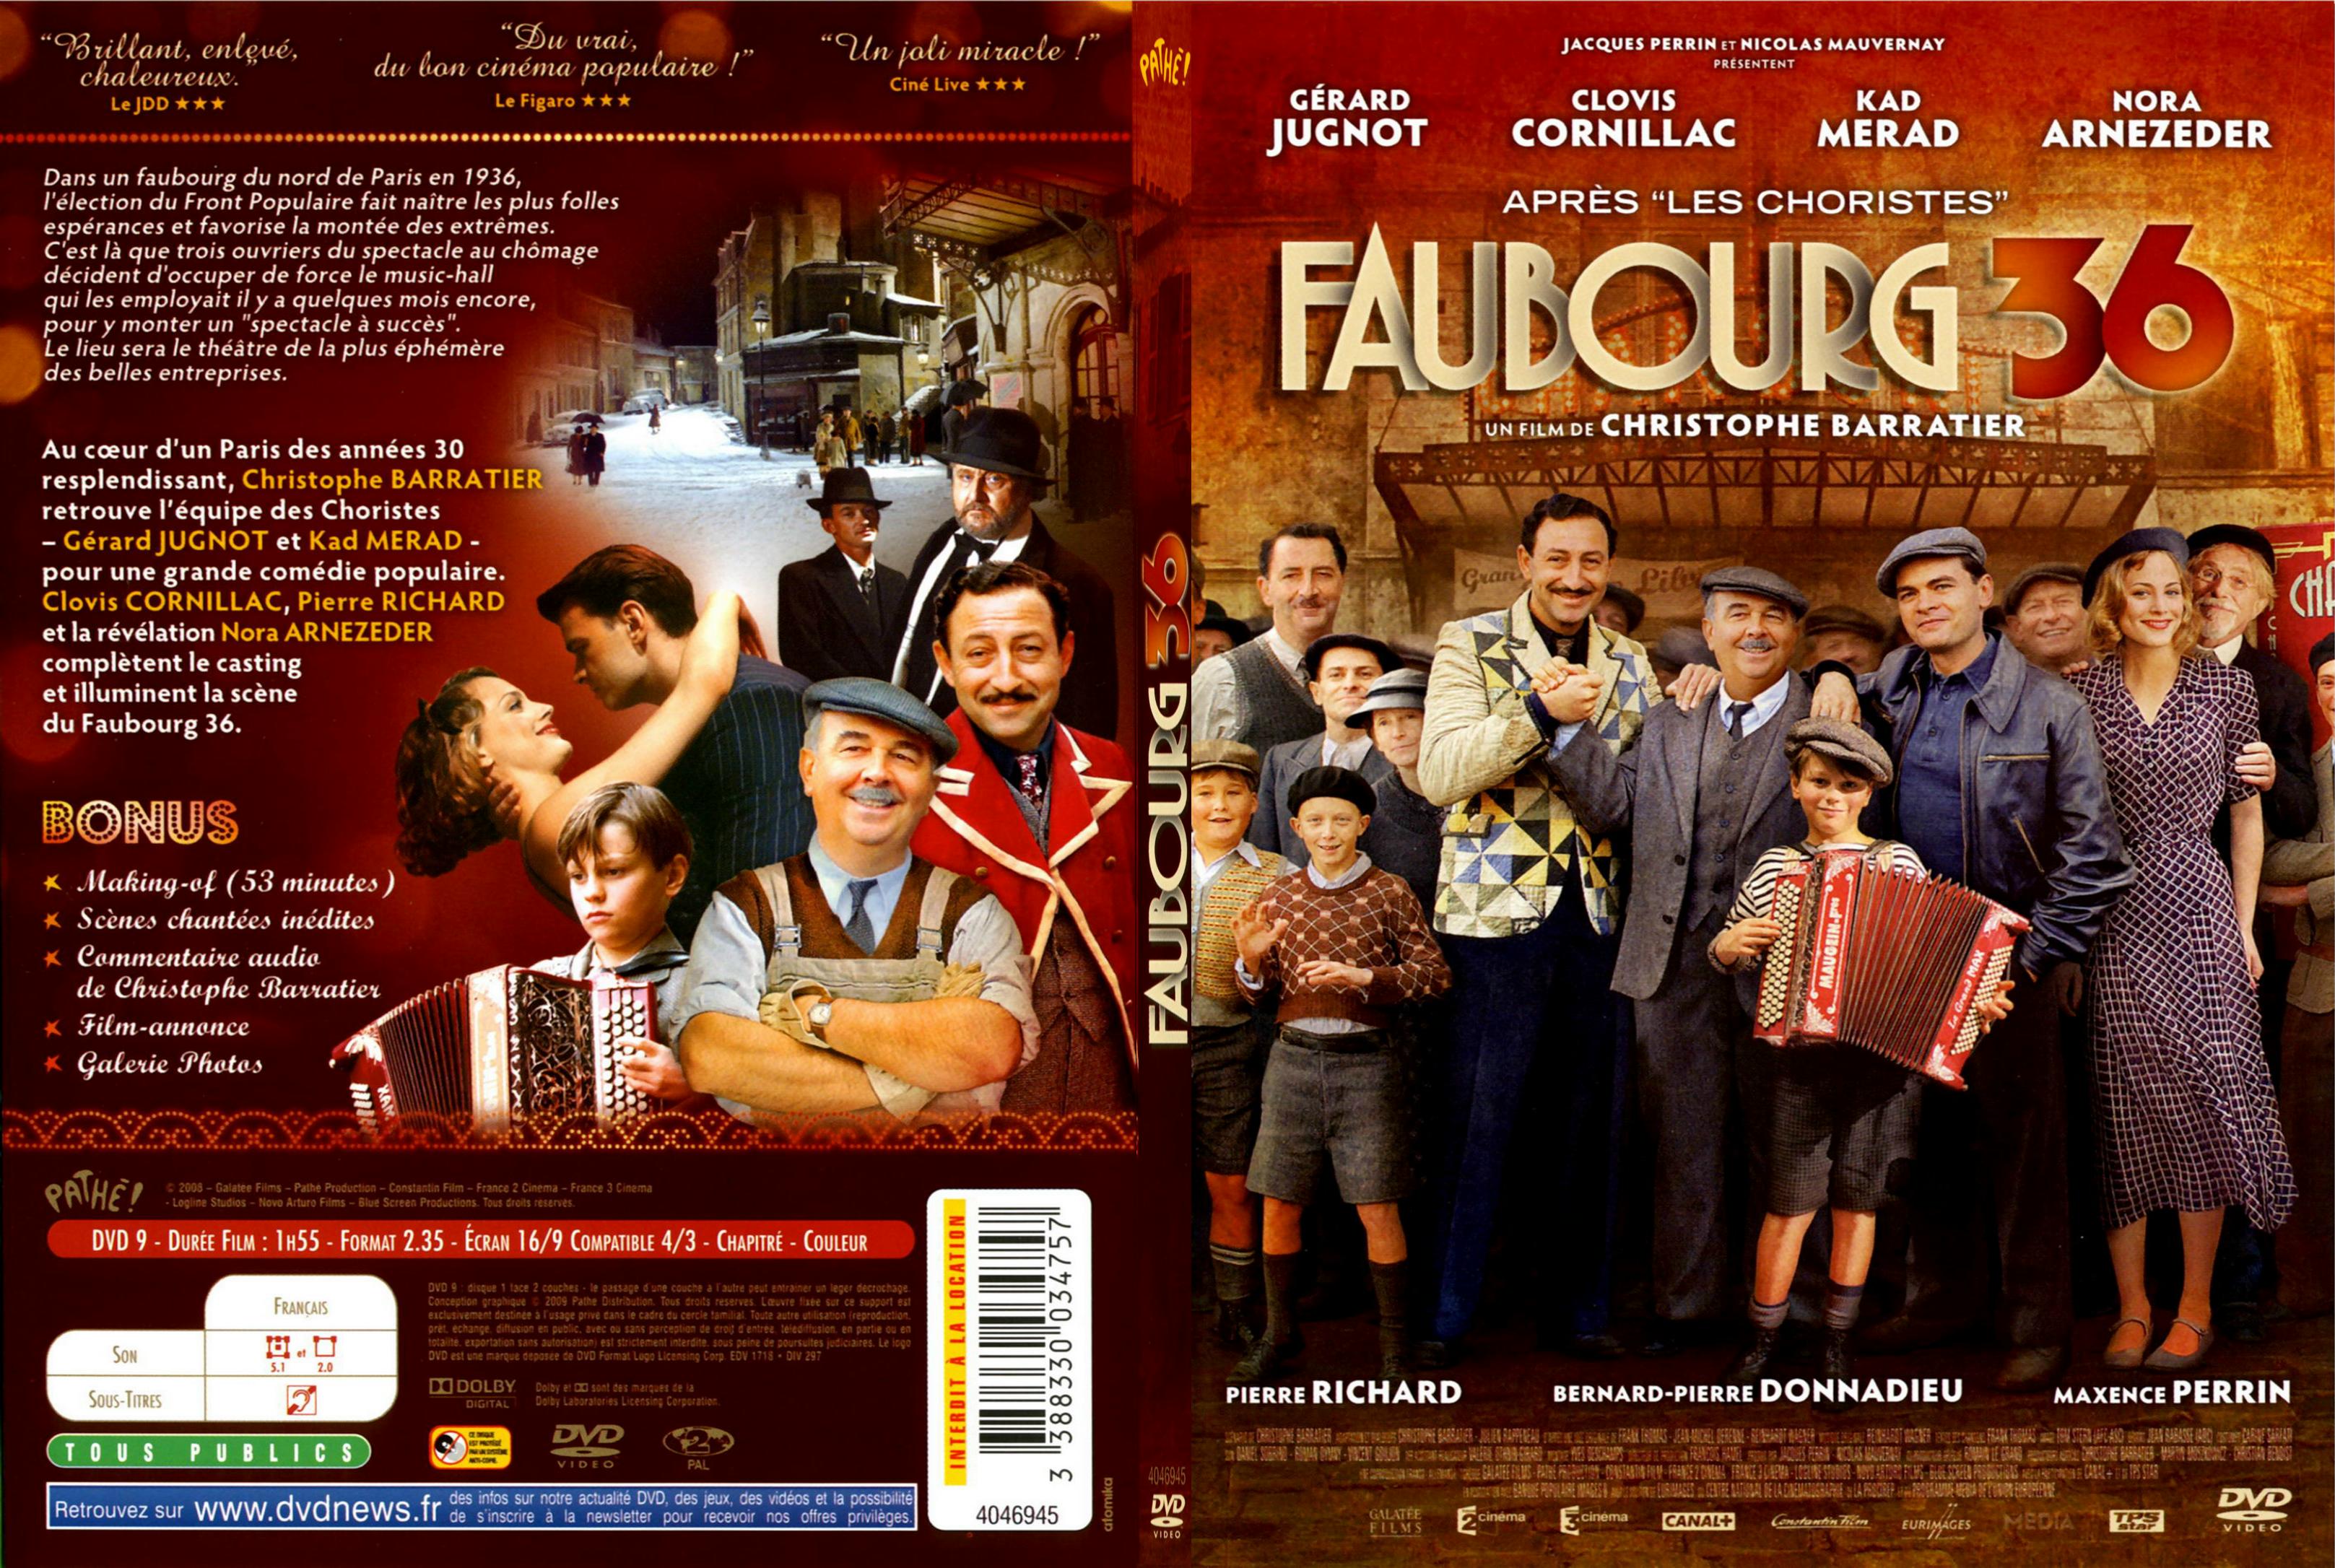 Jaquette DVD Faubourg 36 - SLIM